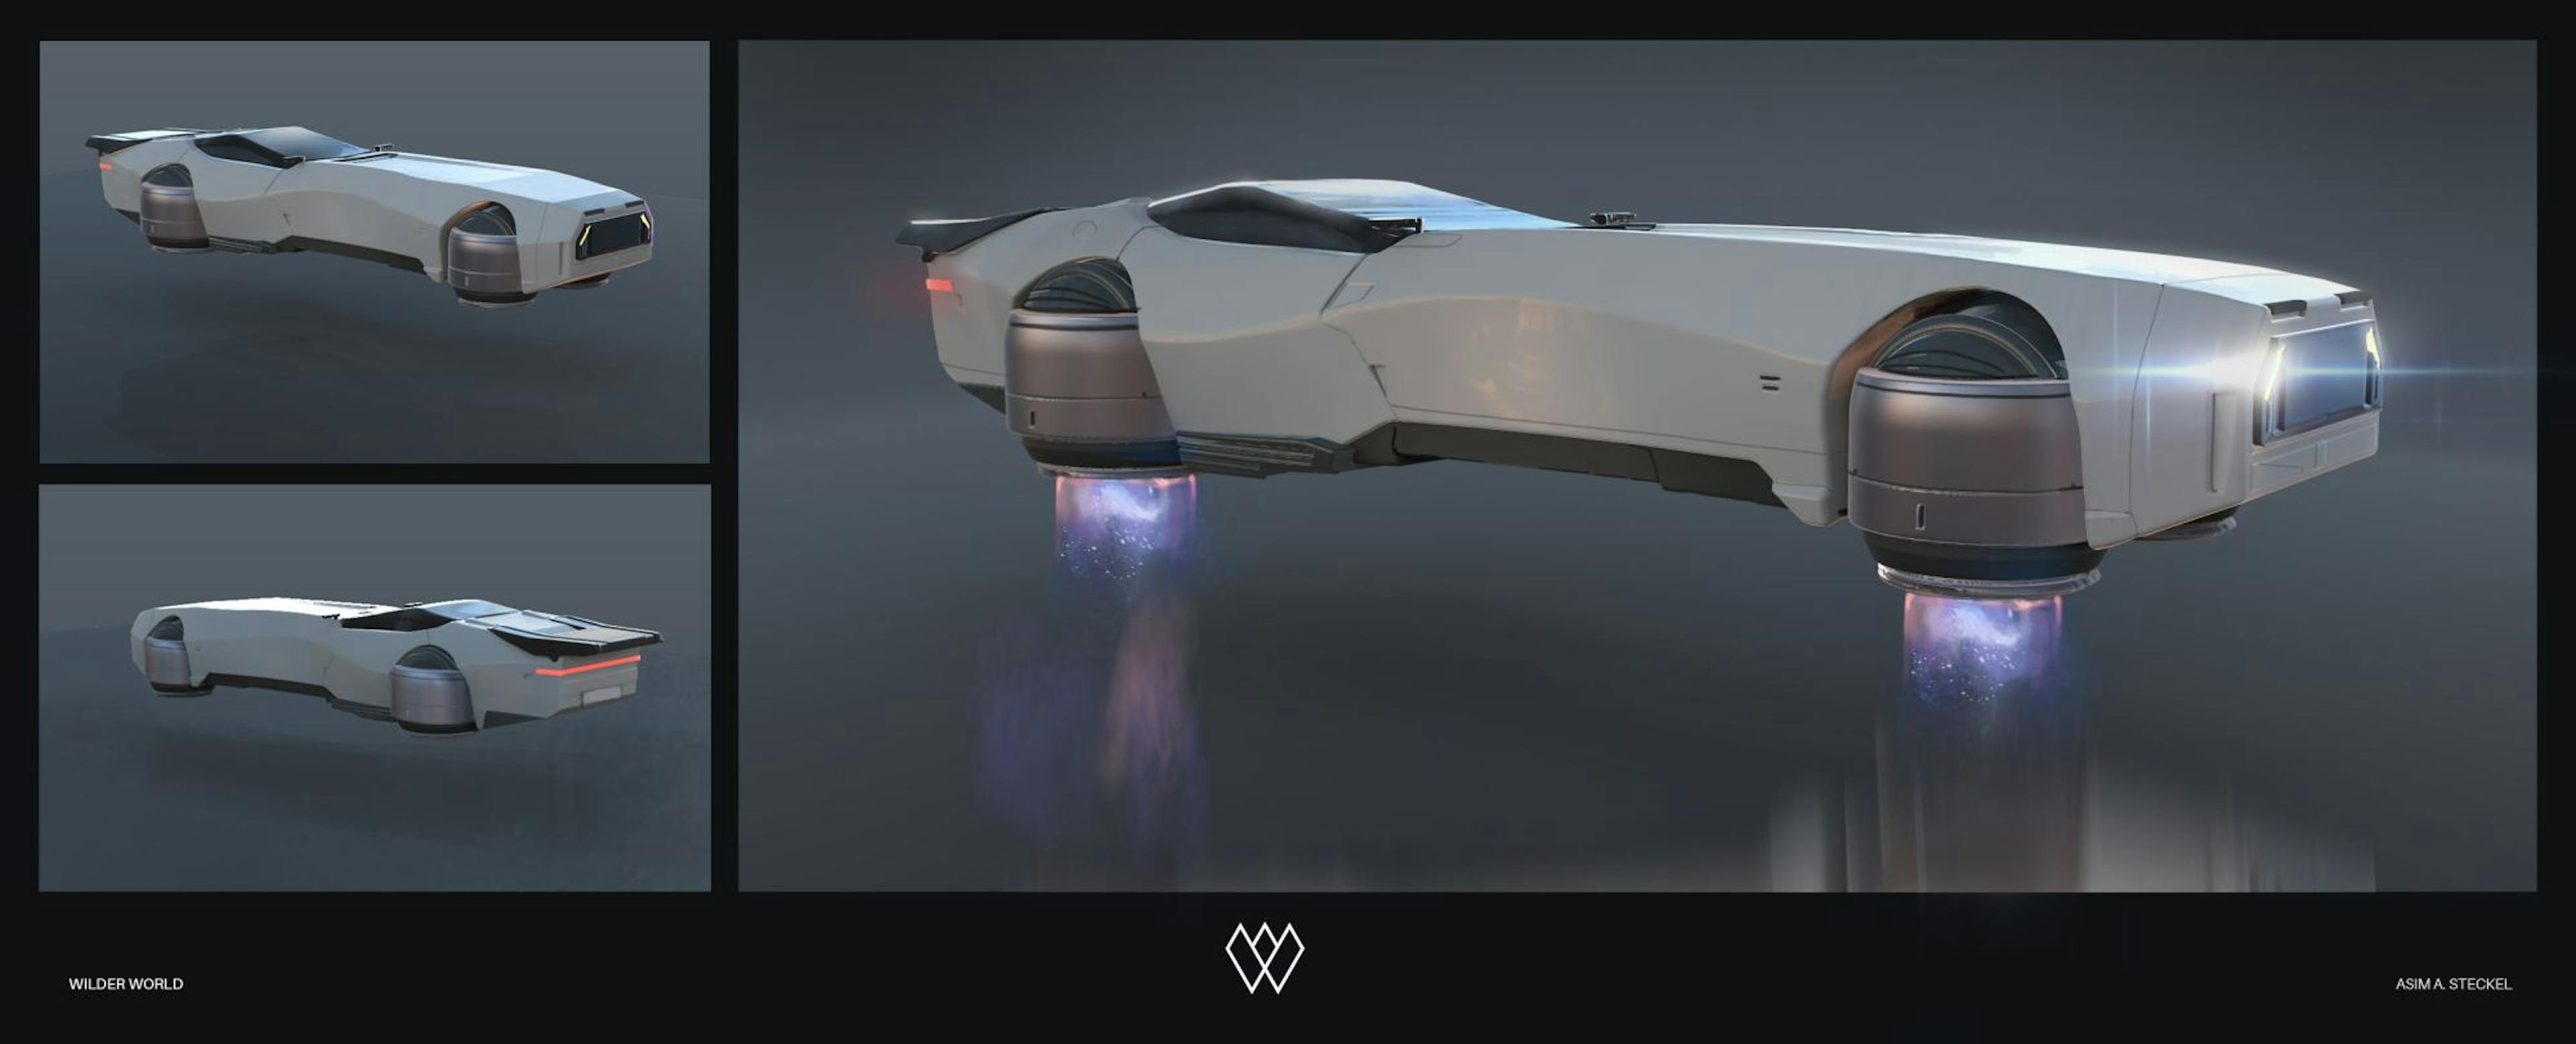 Vehicle Concept Image